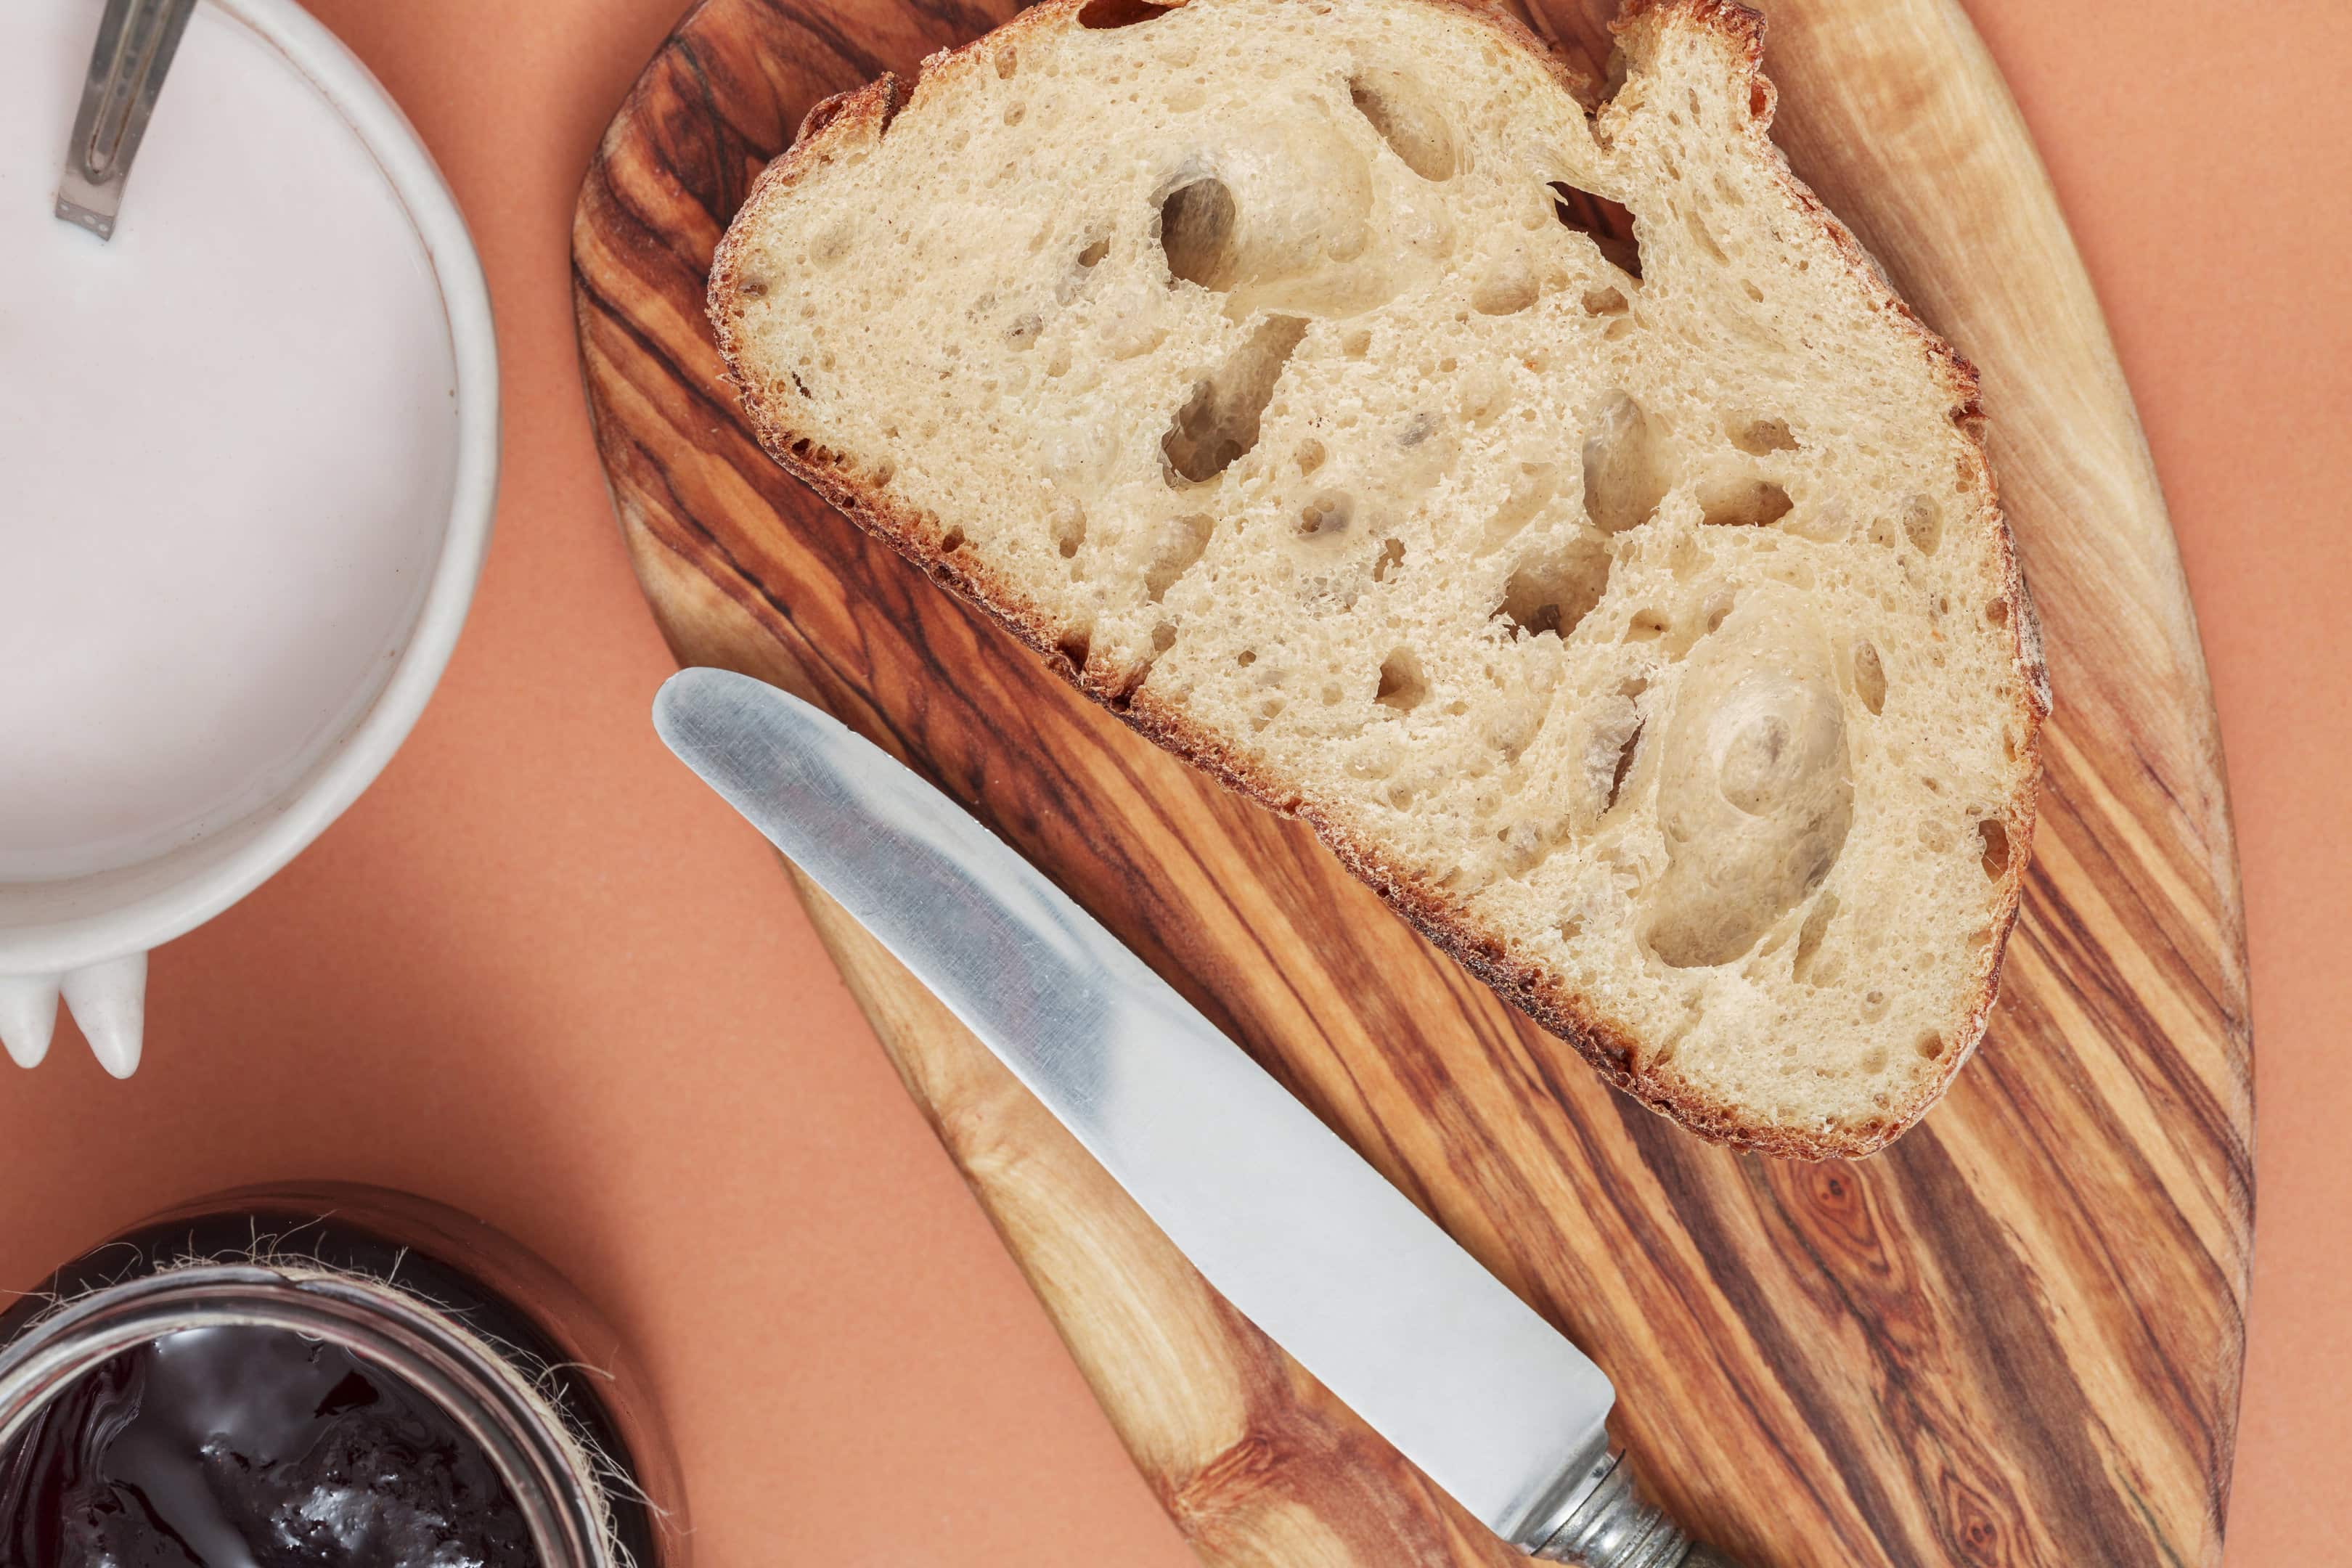 Sliced King Arthur's sourdough bread with a knife, chopping board, milk, and jam